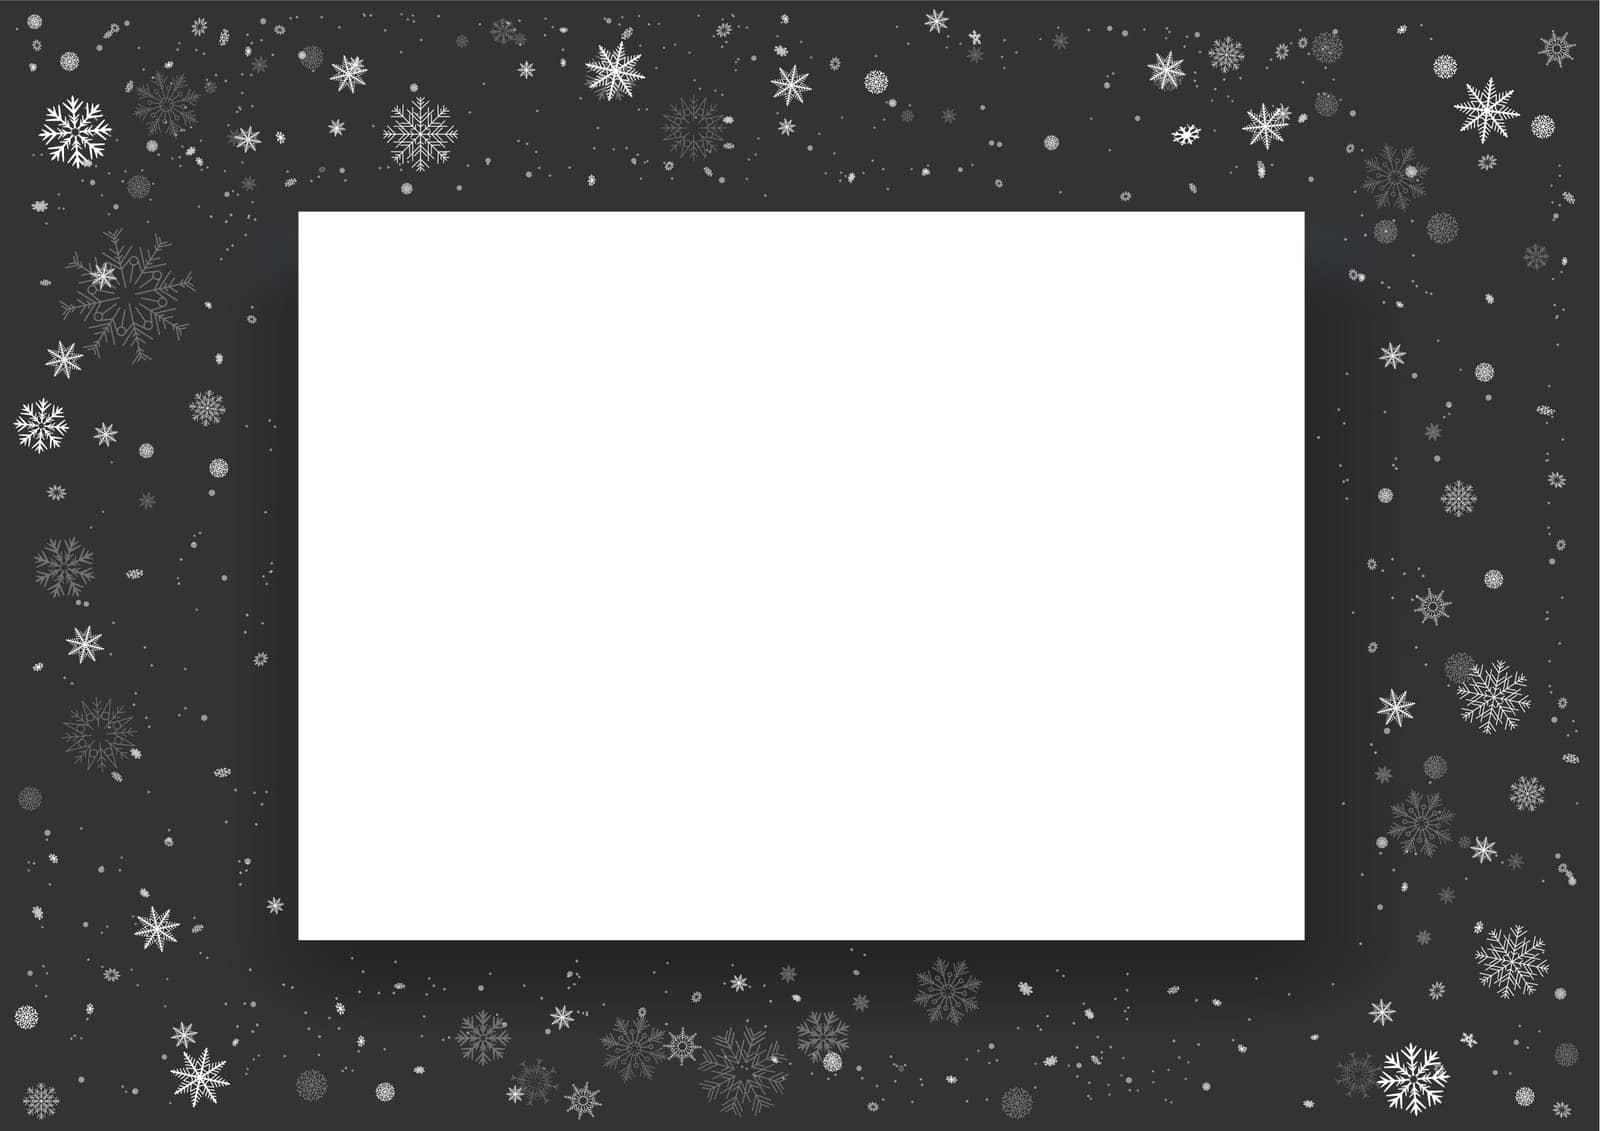 Christmas snow photo frame dark template with shadow. Winter Holiday snowfall season snapshot background. Seasonal picture decoration backdrop